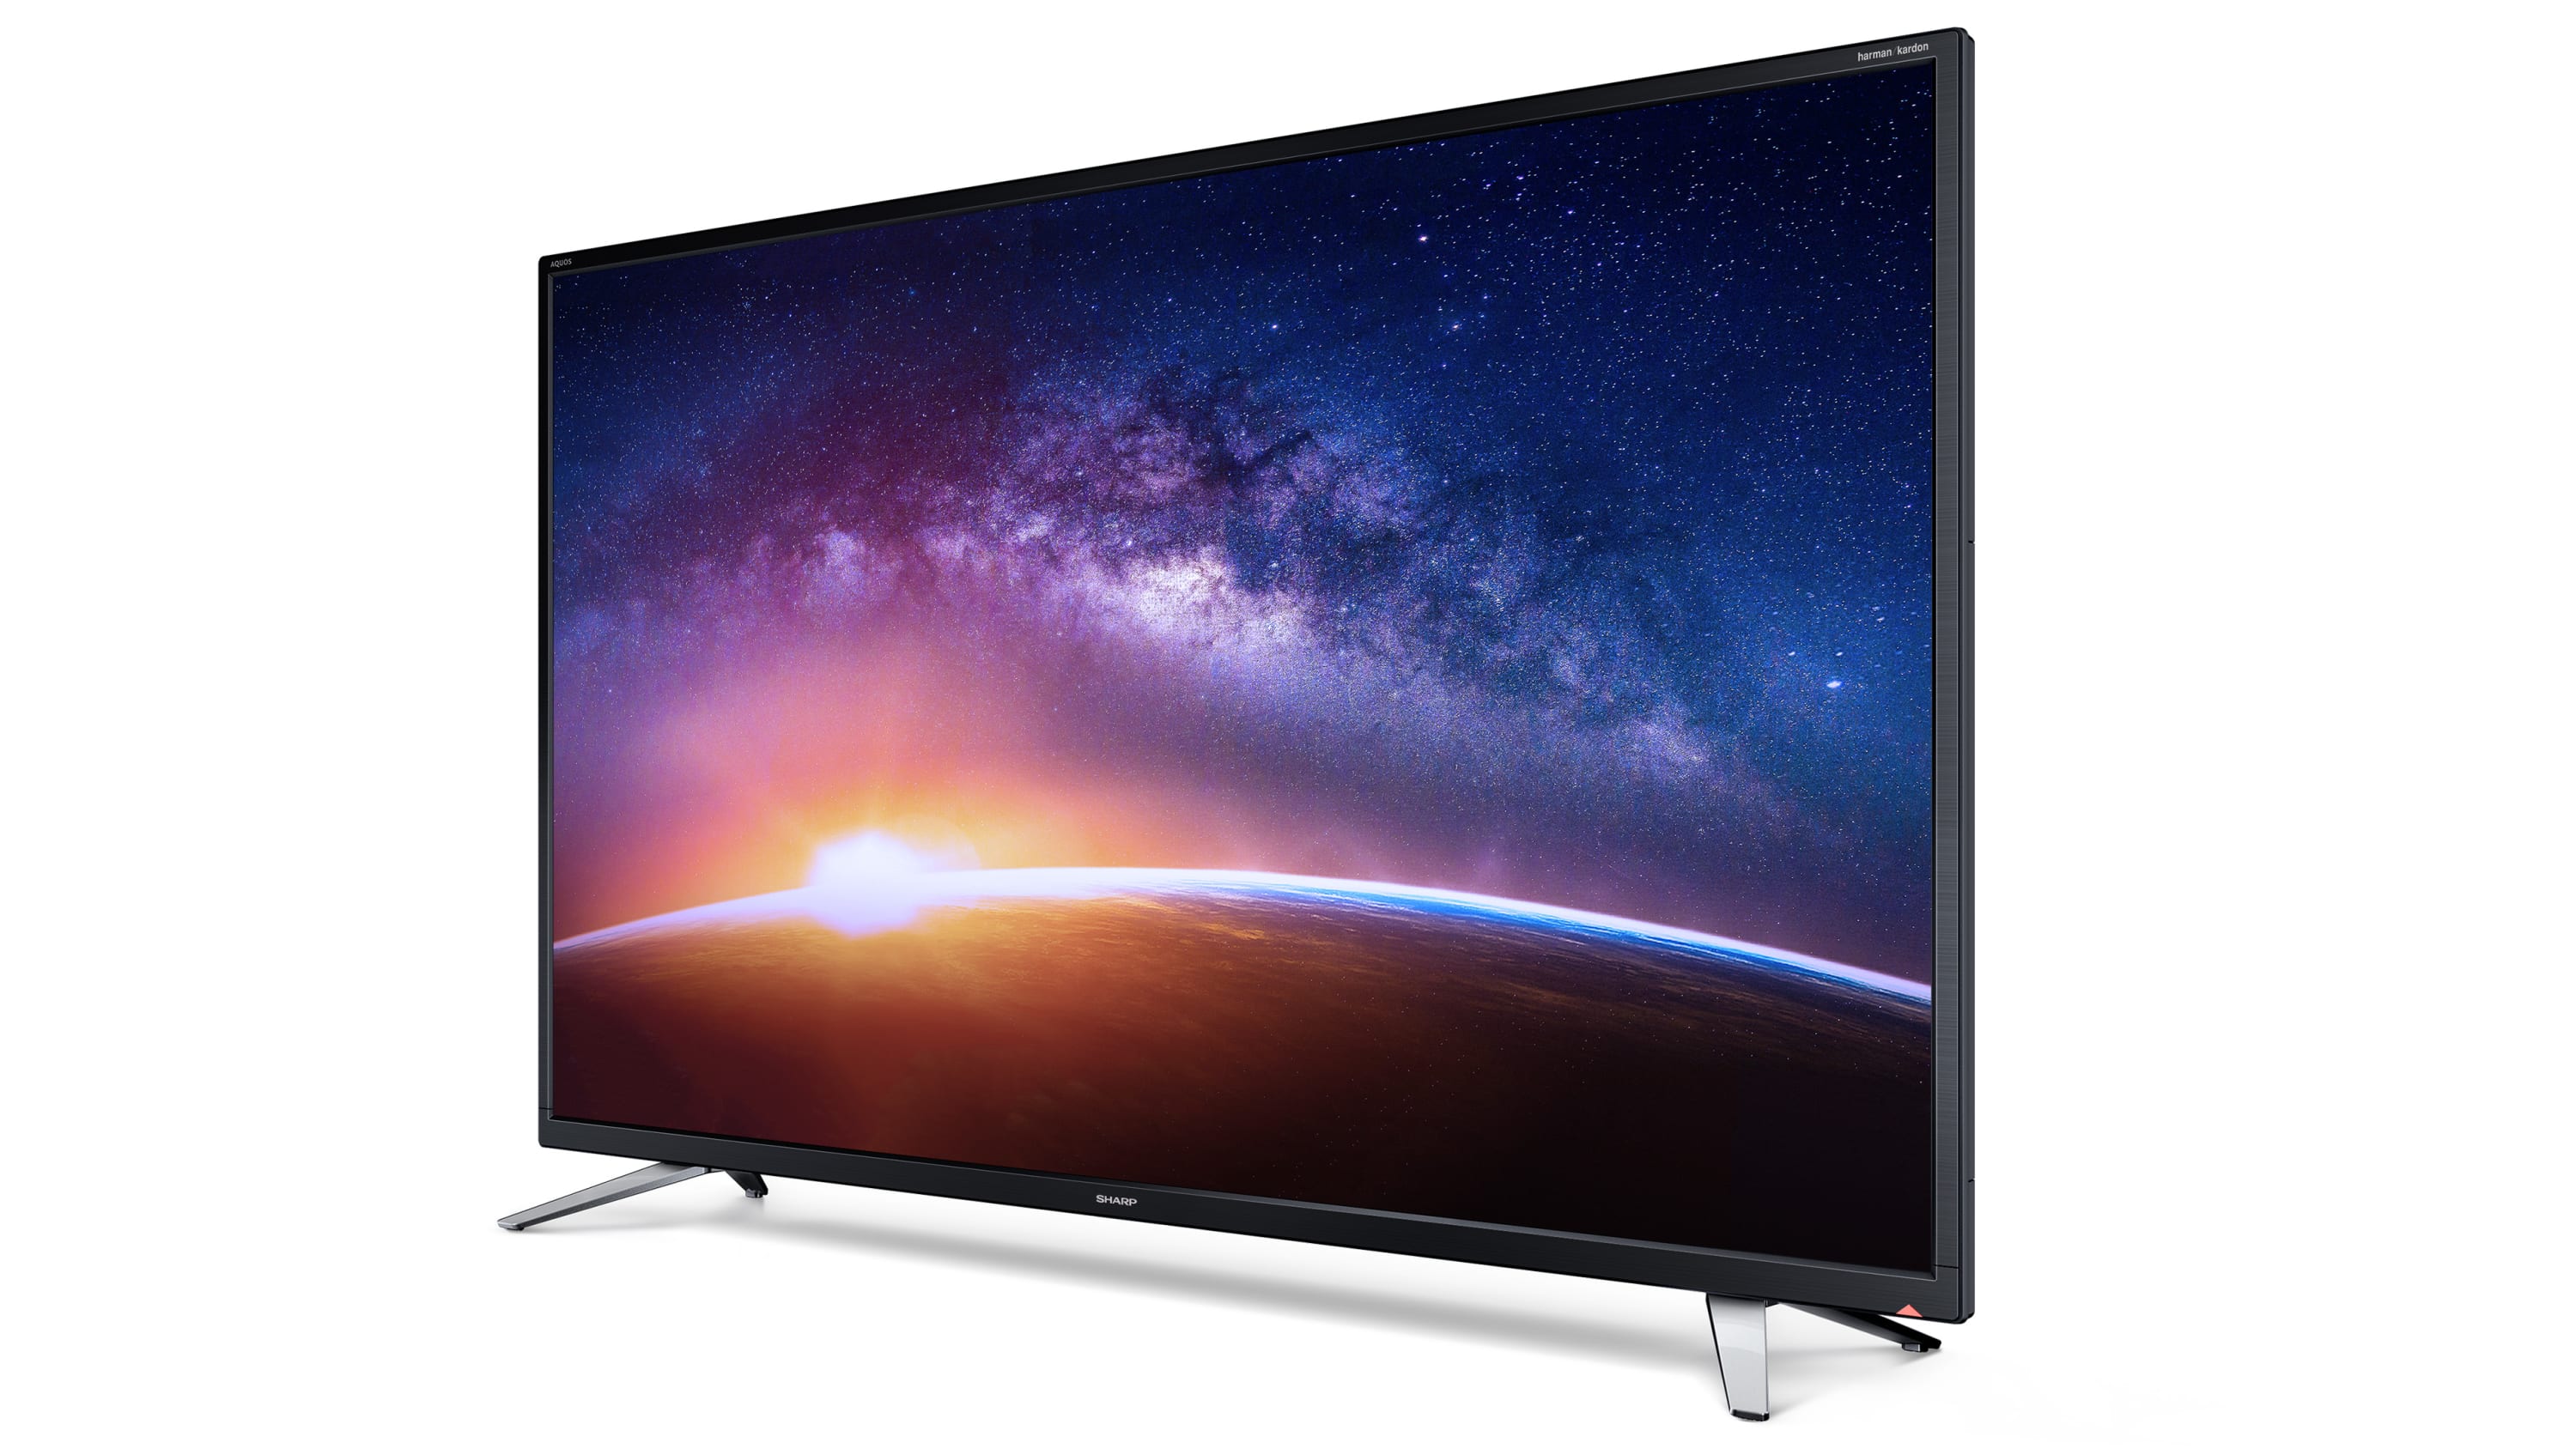 Smart TV HD/Full HD - 42" FULL HD SMART